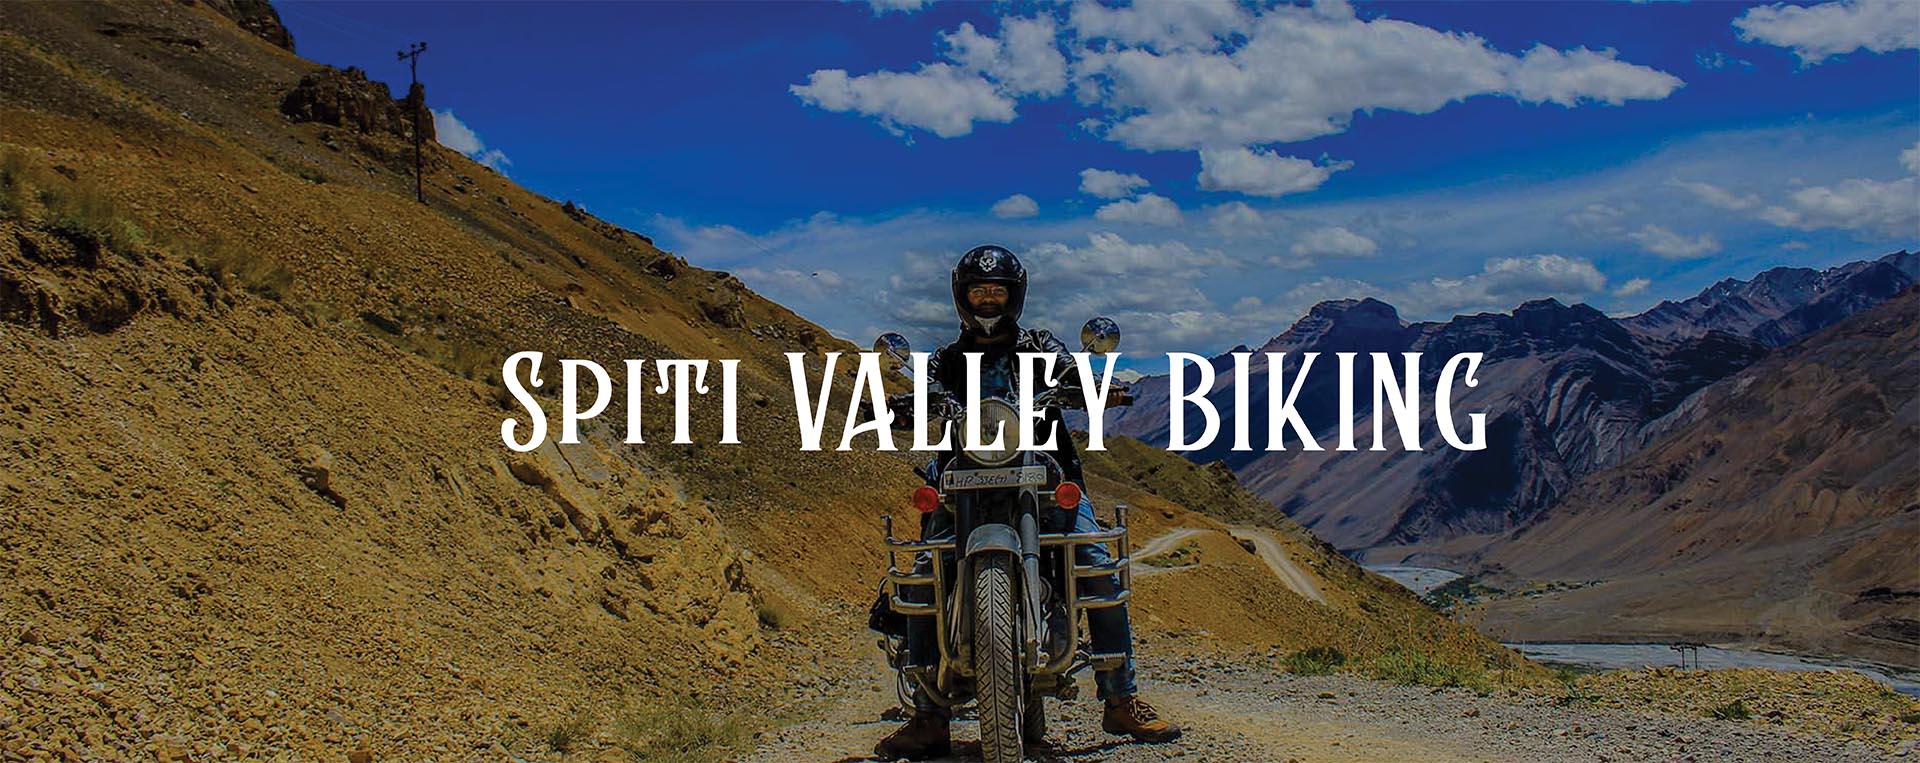 wanderon-spiti-valley-biking